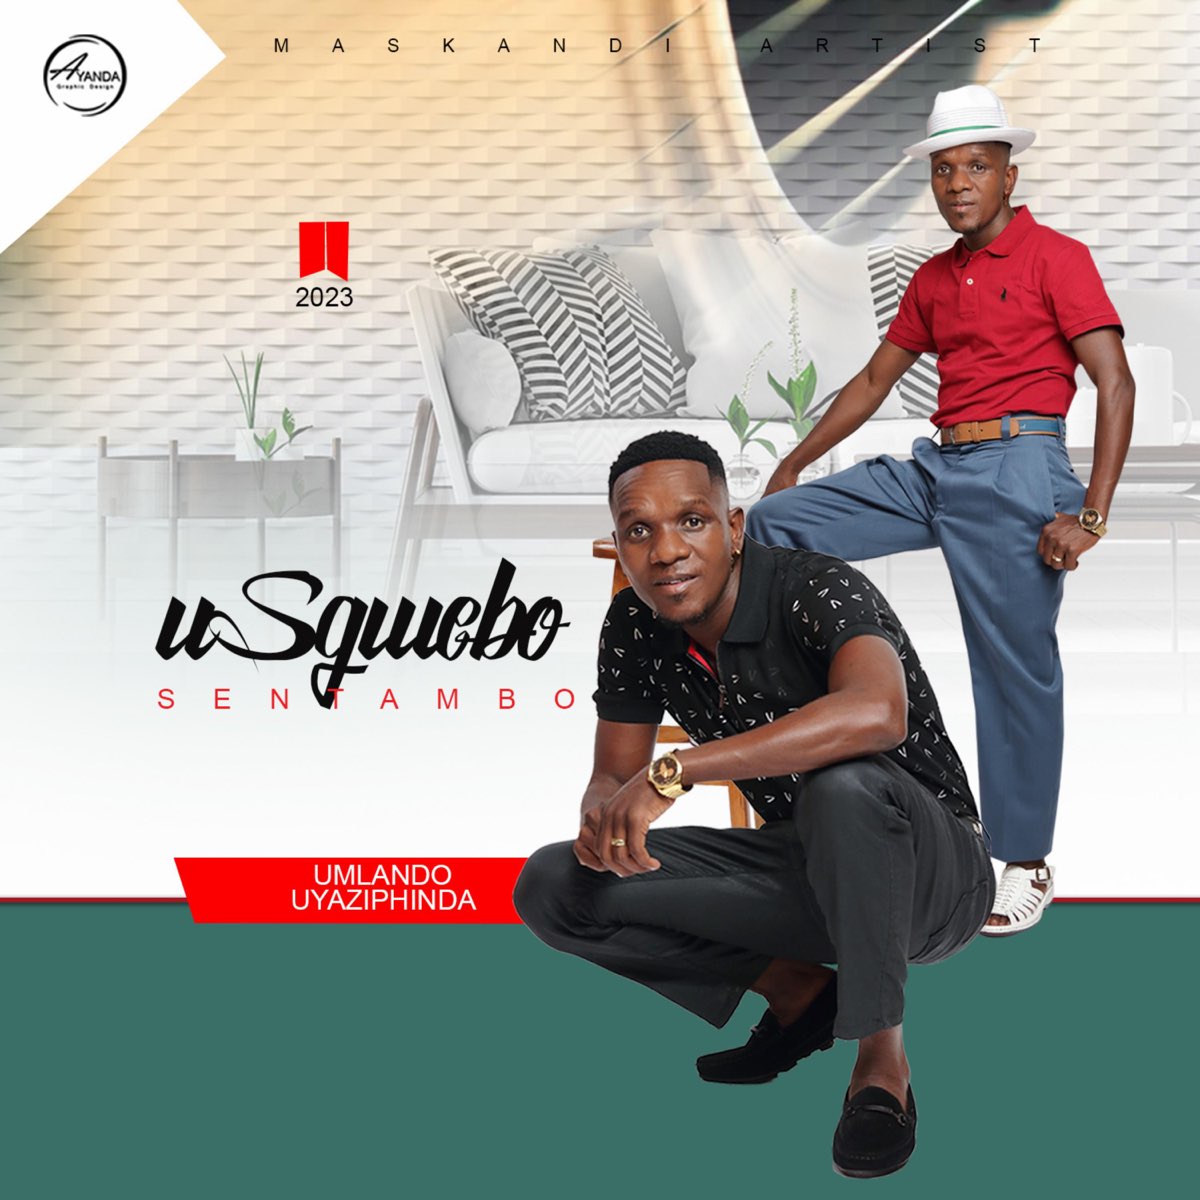 Umlando Uyaziphinda by Sgwebo Sentambo | Album